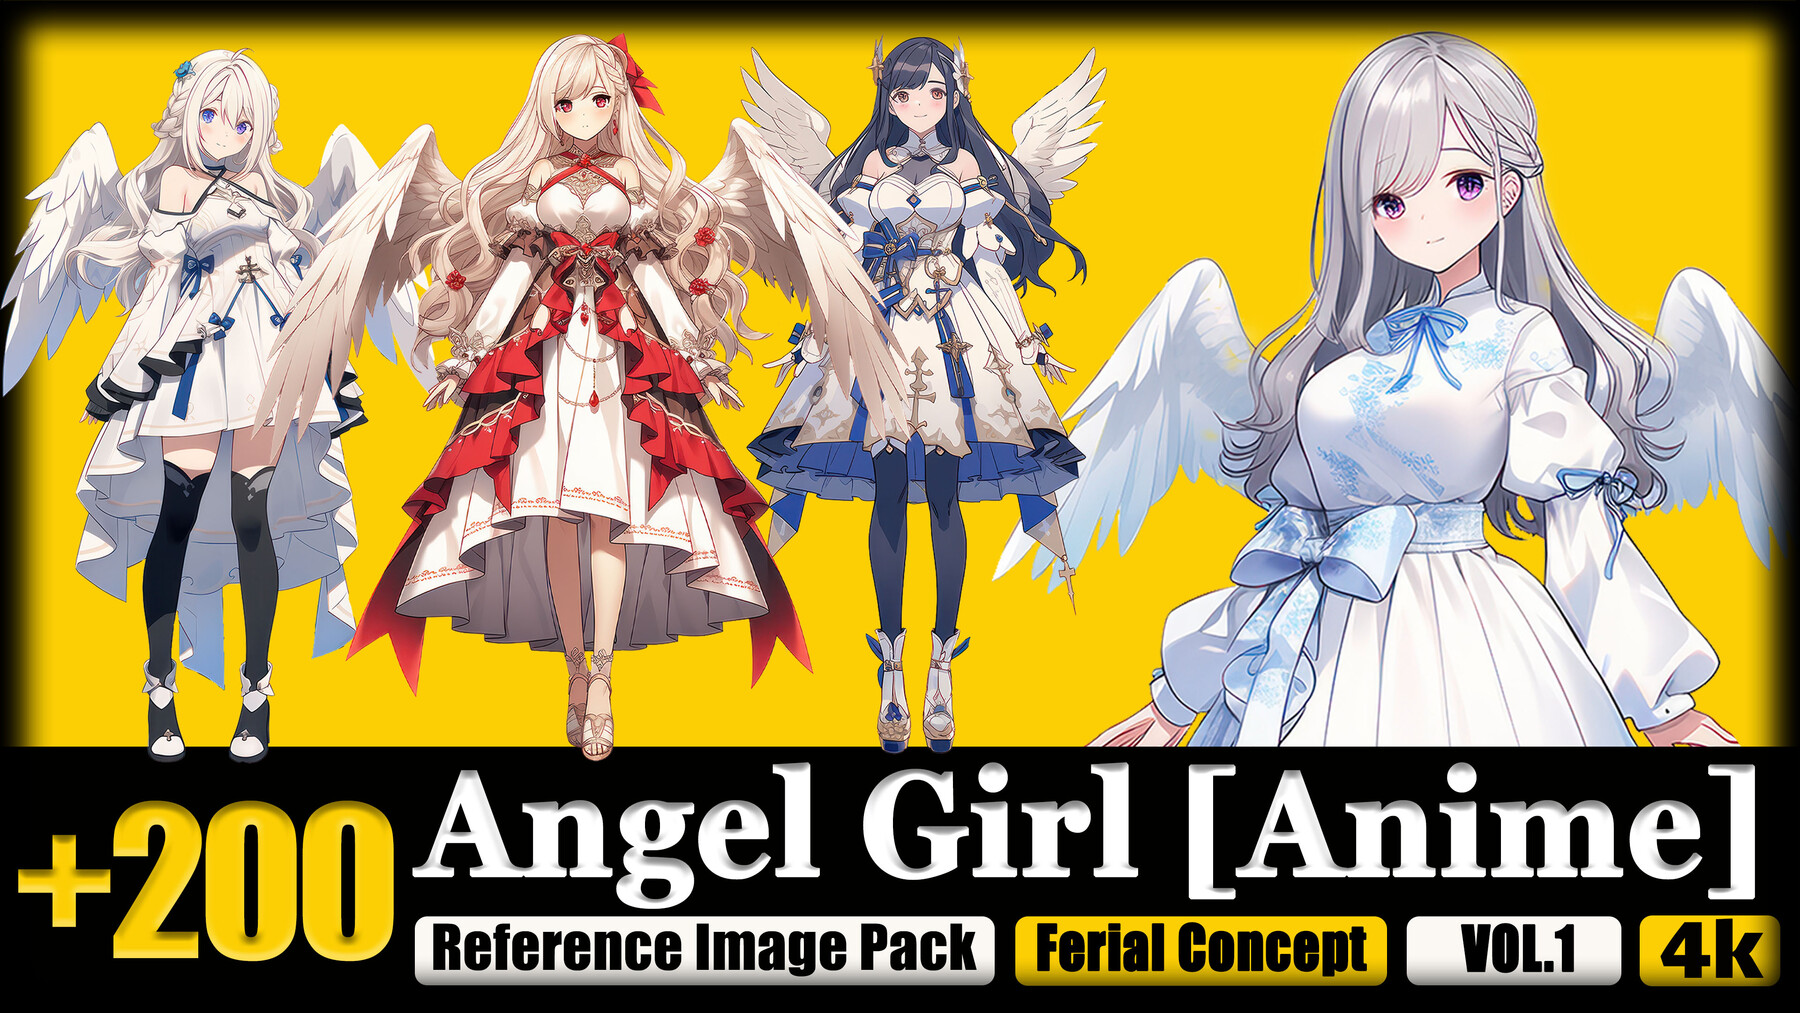 ArtStation - 🔹200 Angel Boy Character [Anime] Reference Image Pack v.2